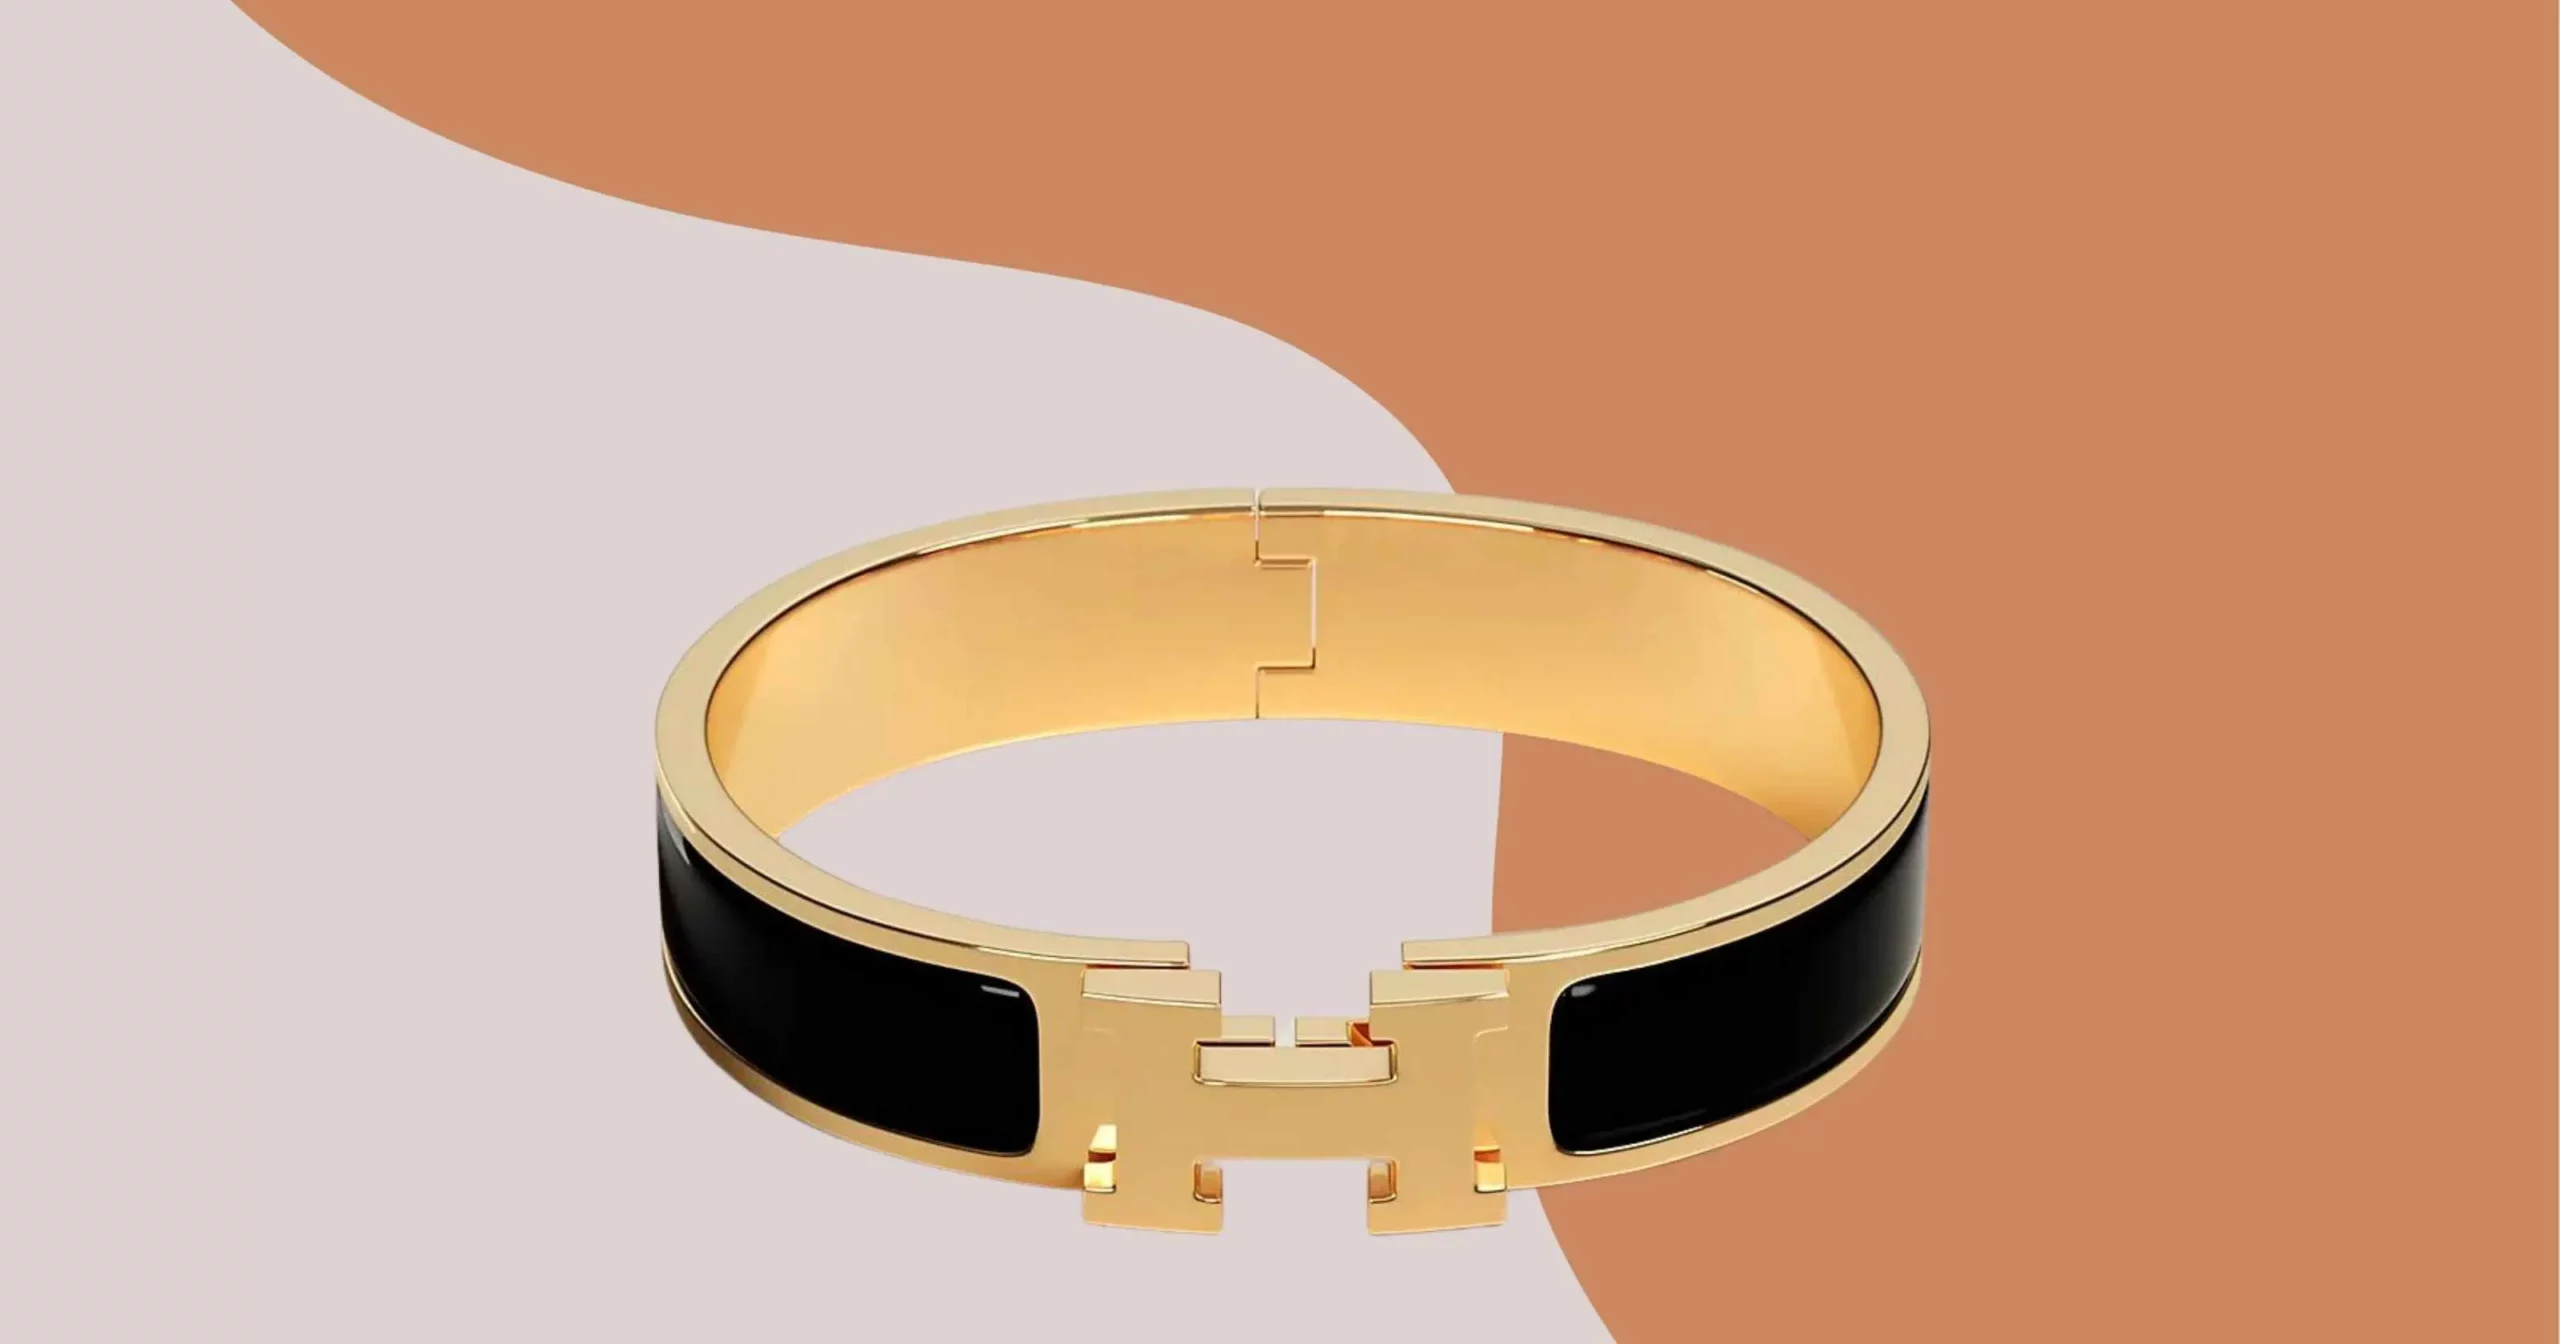 best site for replica Hermes Bracelets Jewelry sale via PAYPAL